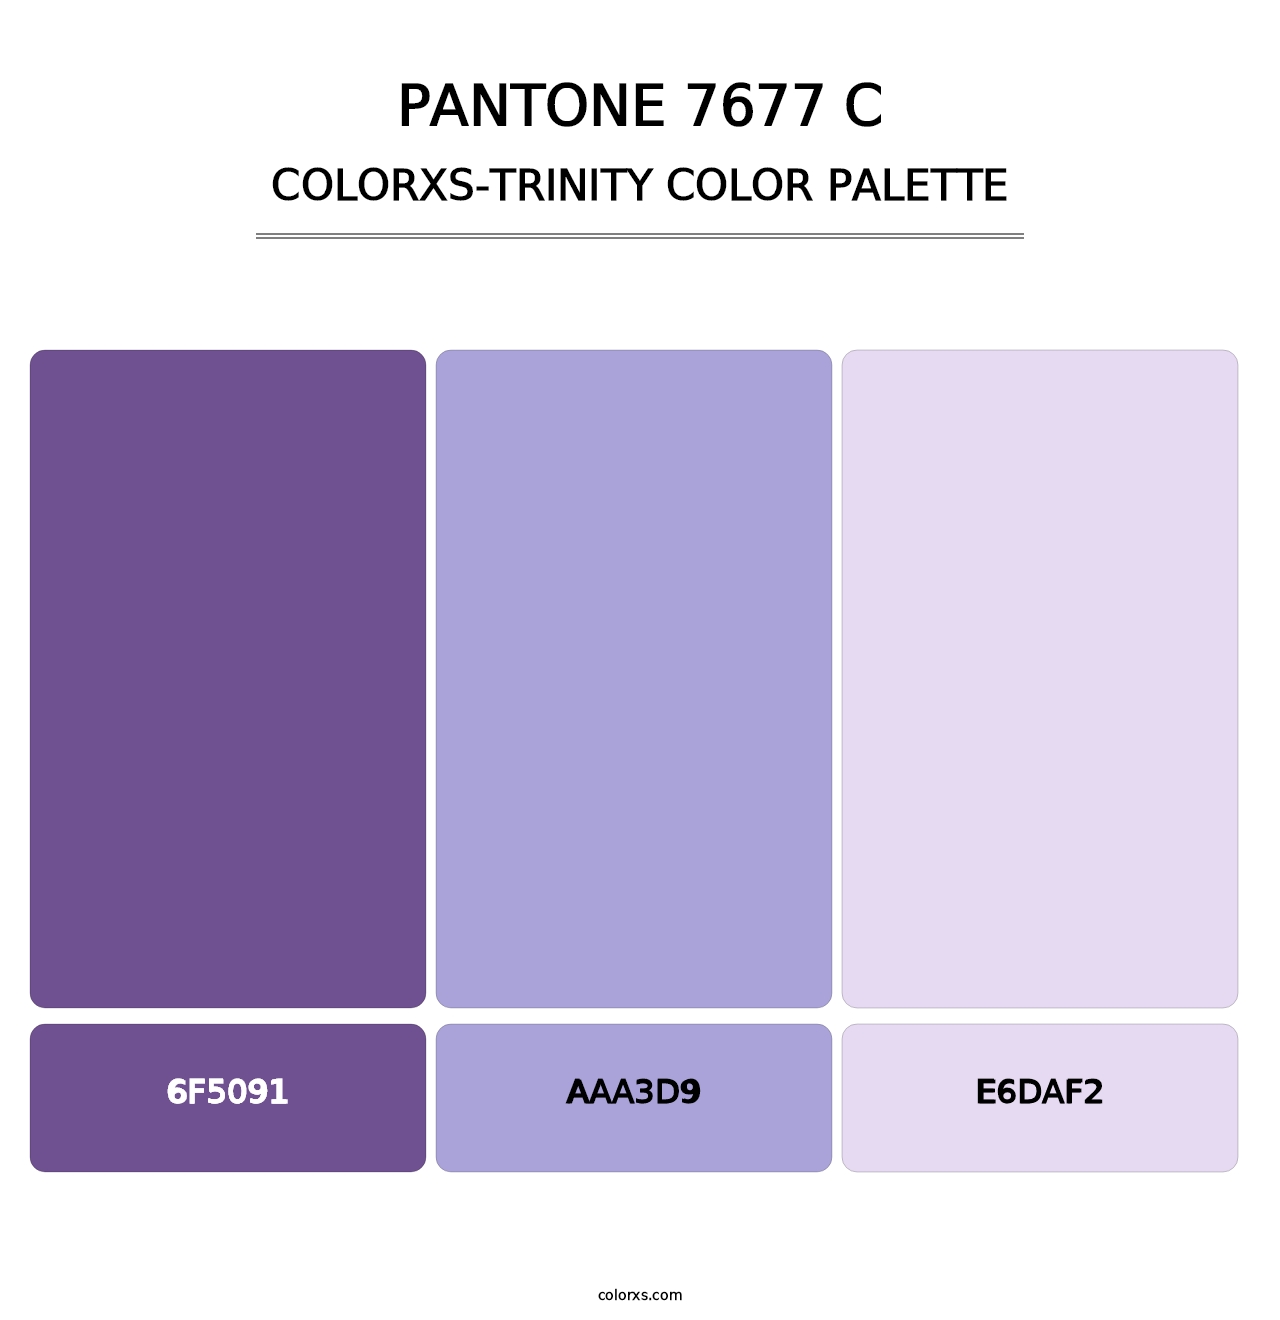 PANTONE 7677 C - Colorxs Trinity Palette